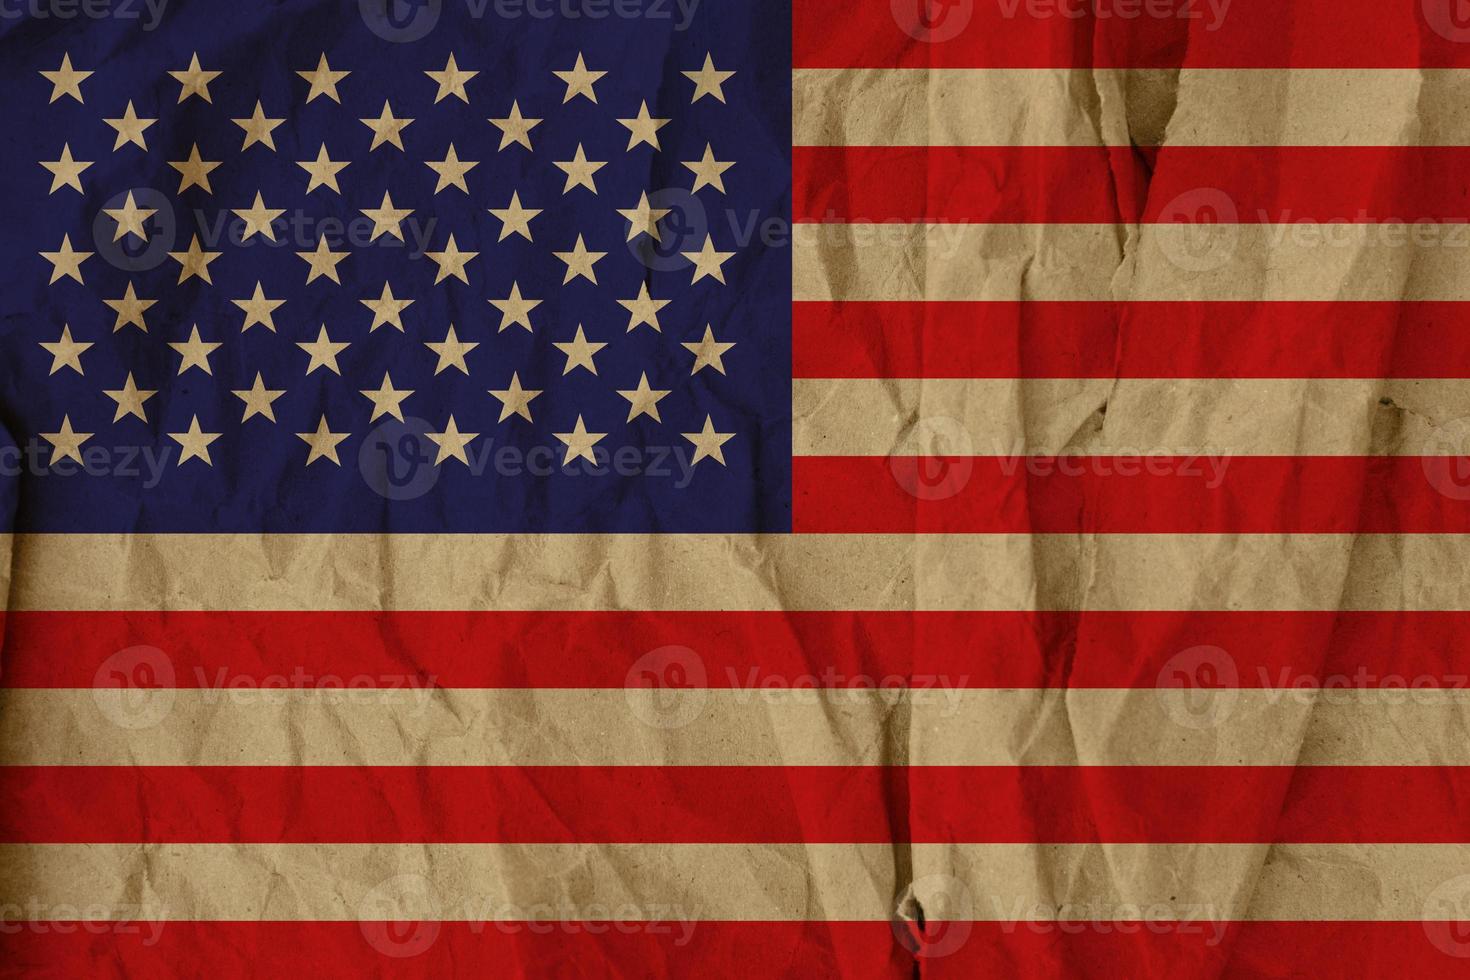 Textured USA flag photo